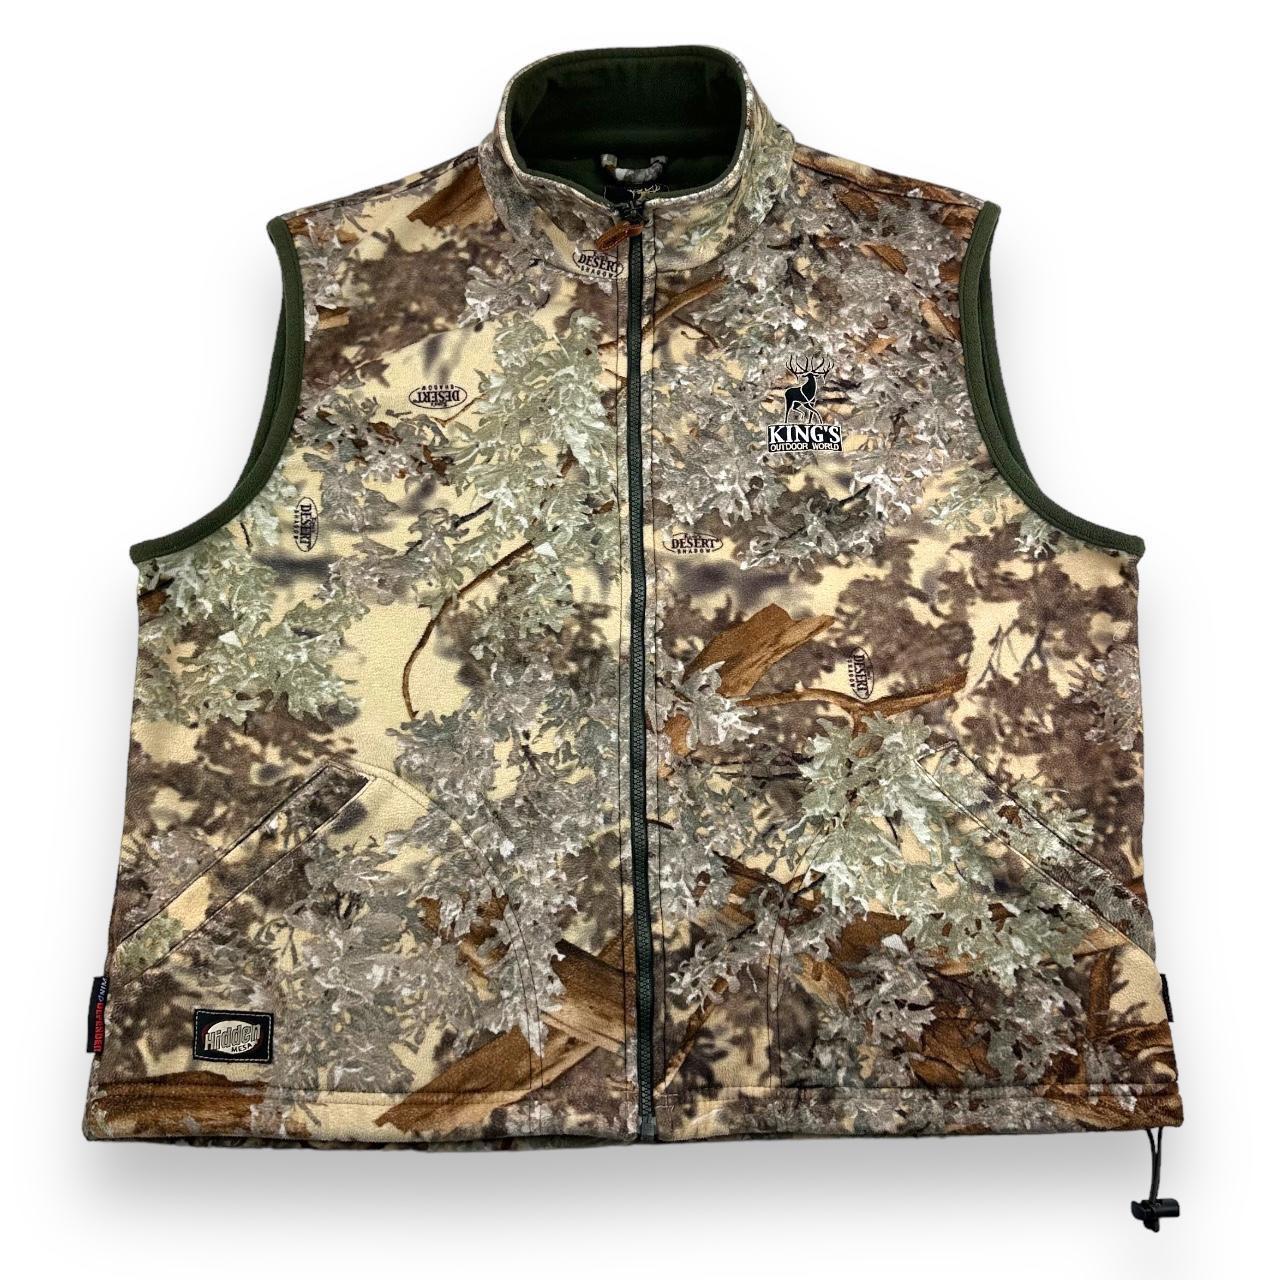 Field & stream fishing vest Size XL 25x24 #fishing - Depop